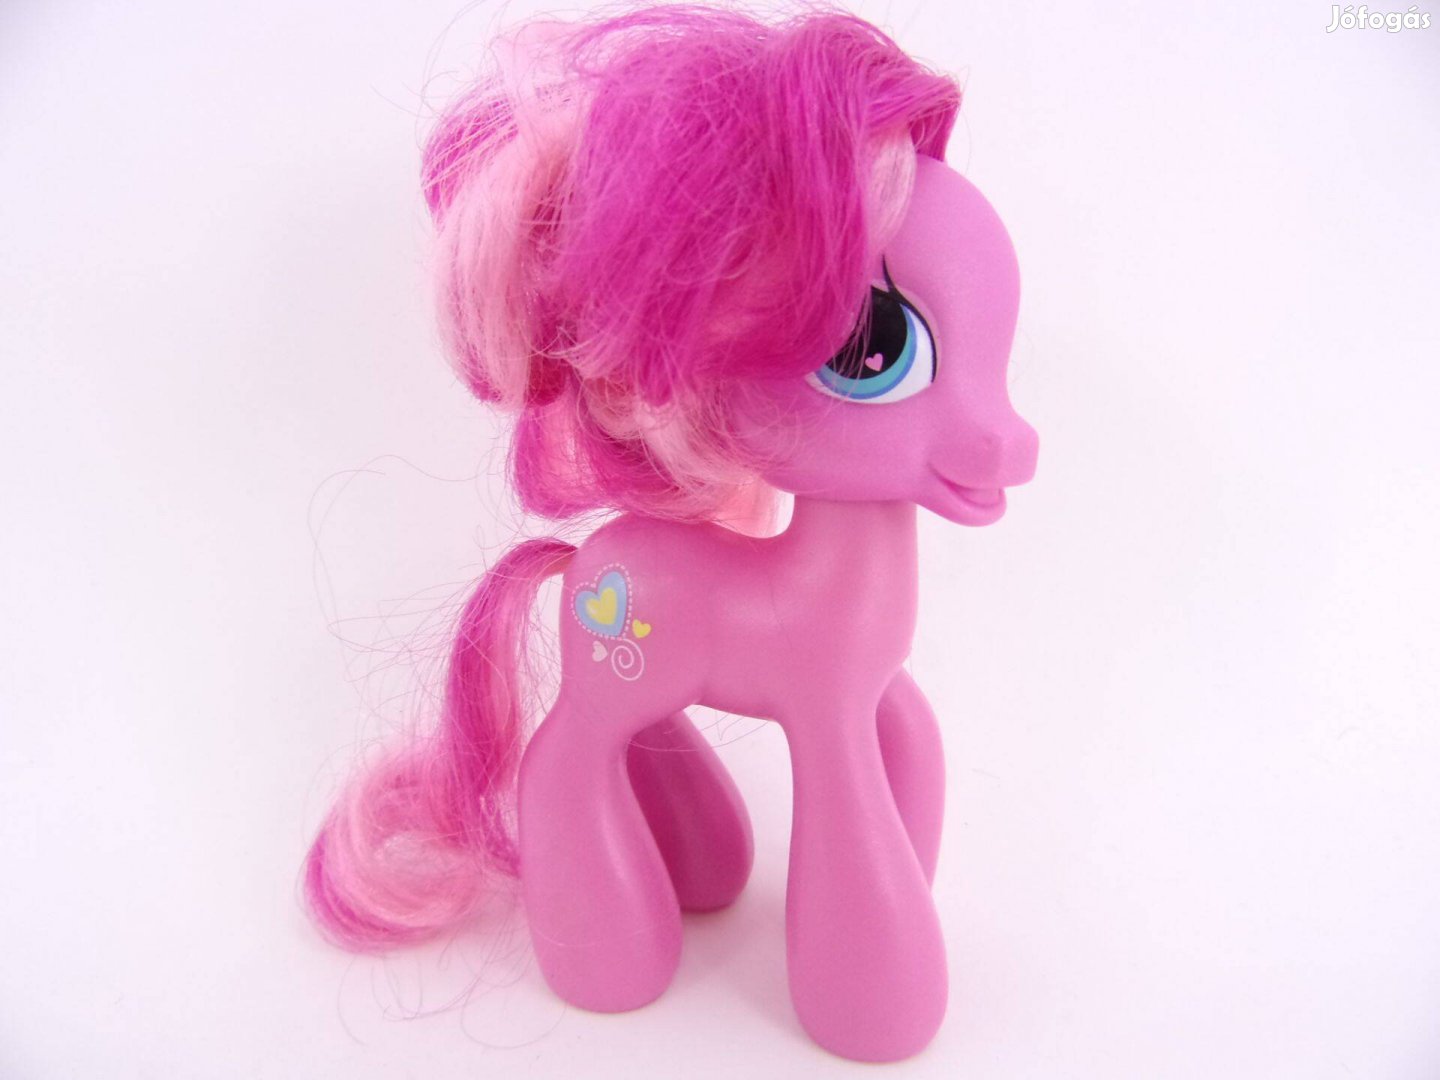 My Little Pony póni figura